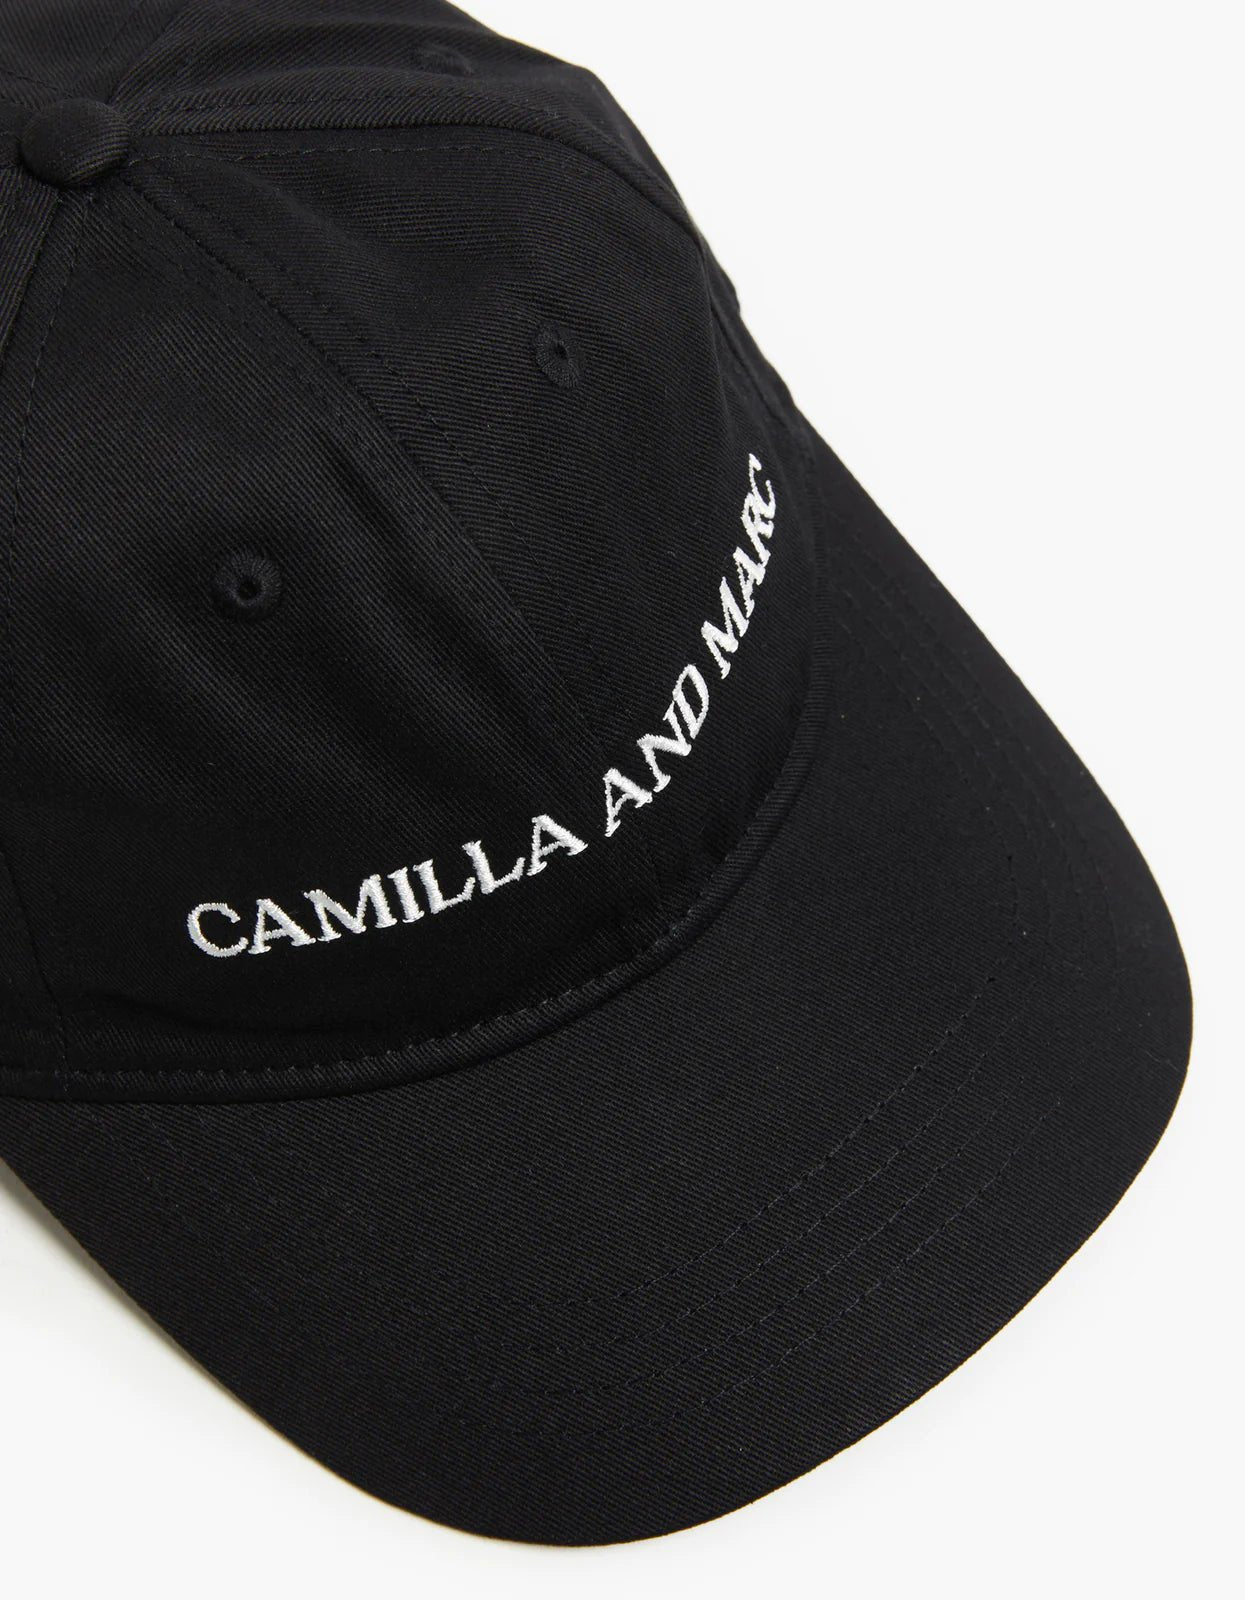 Camilla and Marc | Asher Cap | Black | Palm Boutique